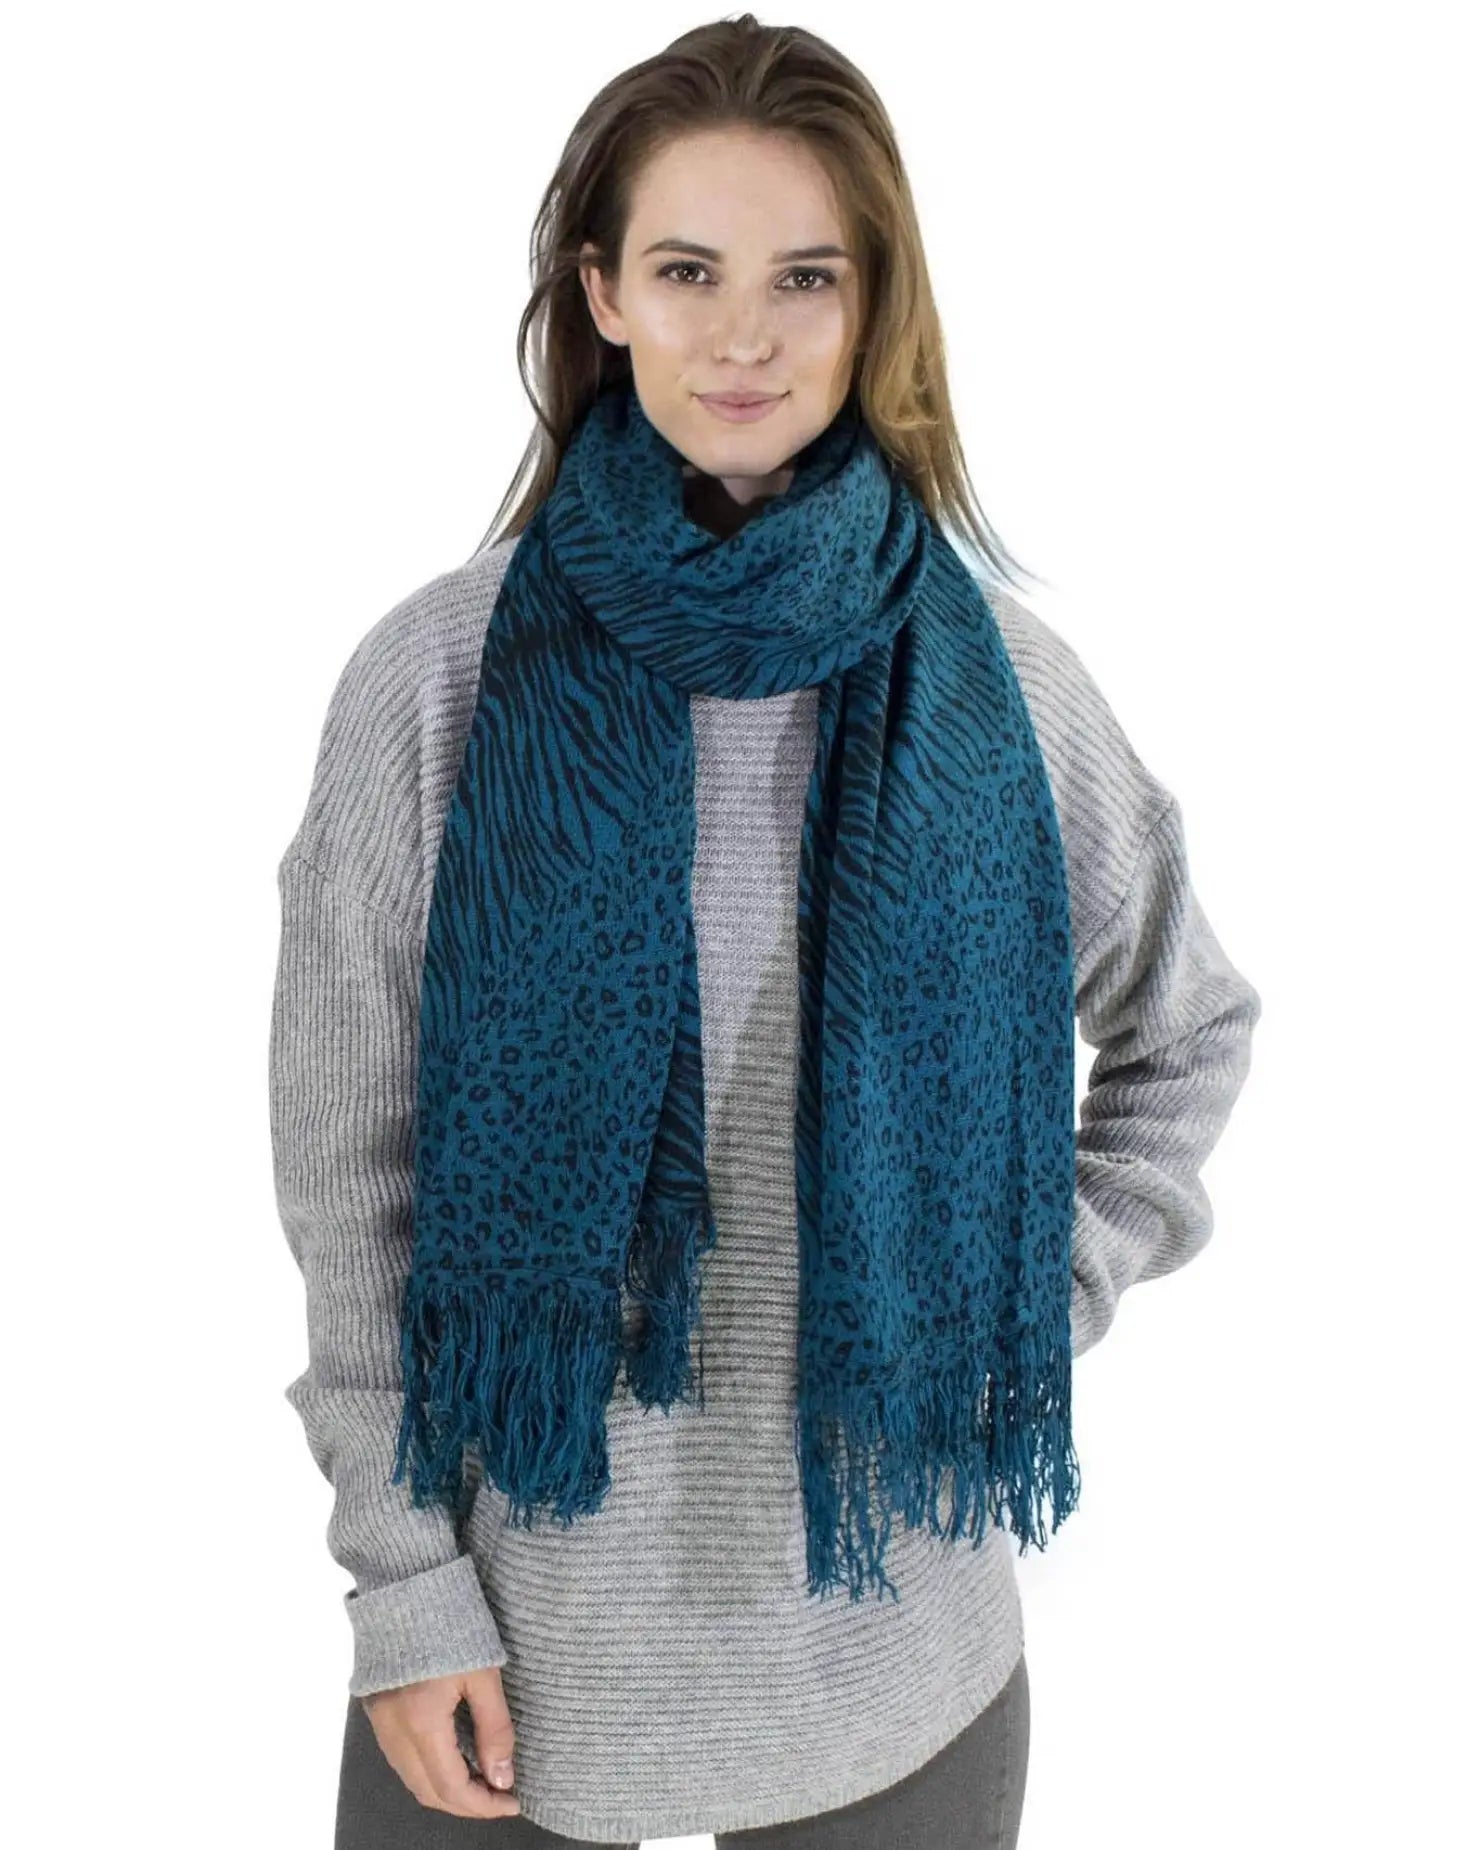 Woman wearing a blue leopard and zebra print winter scarf.